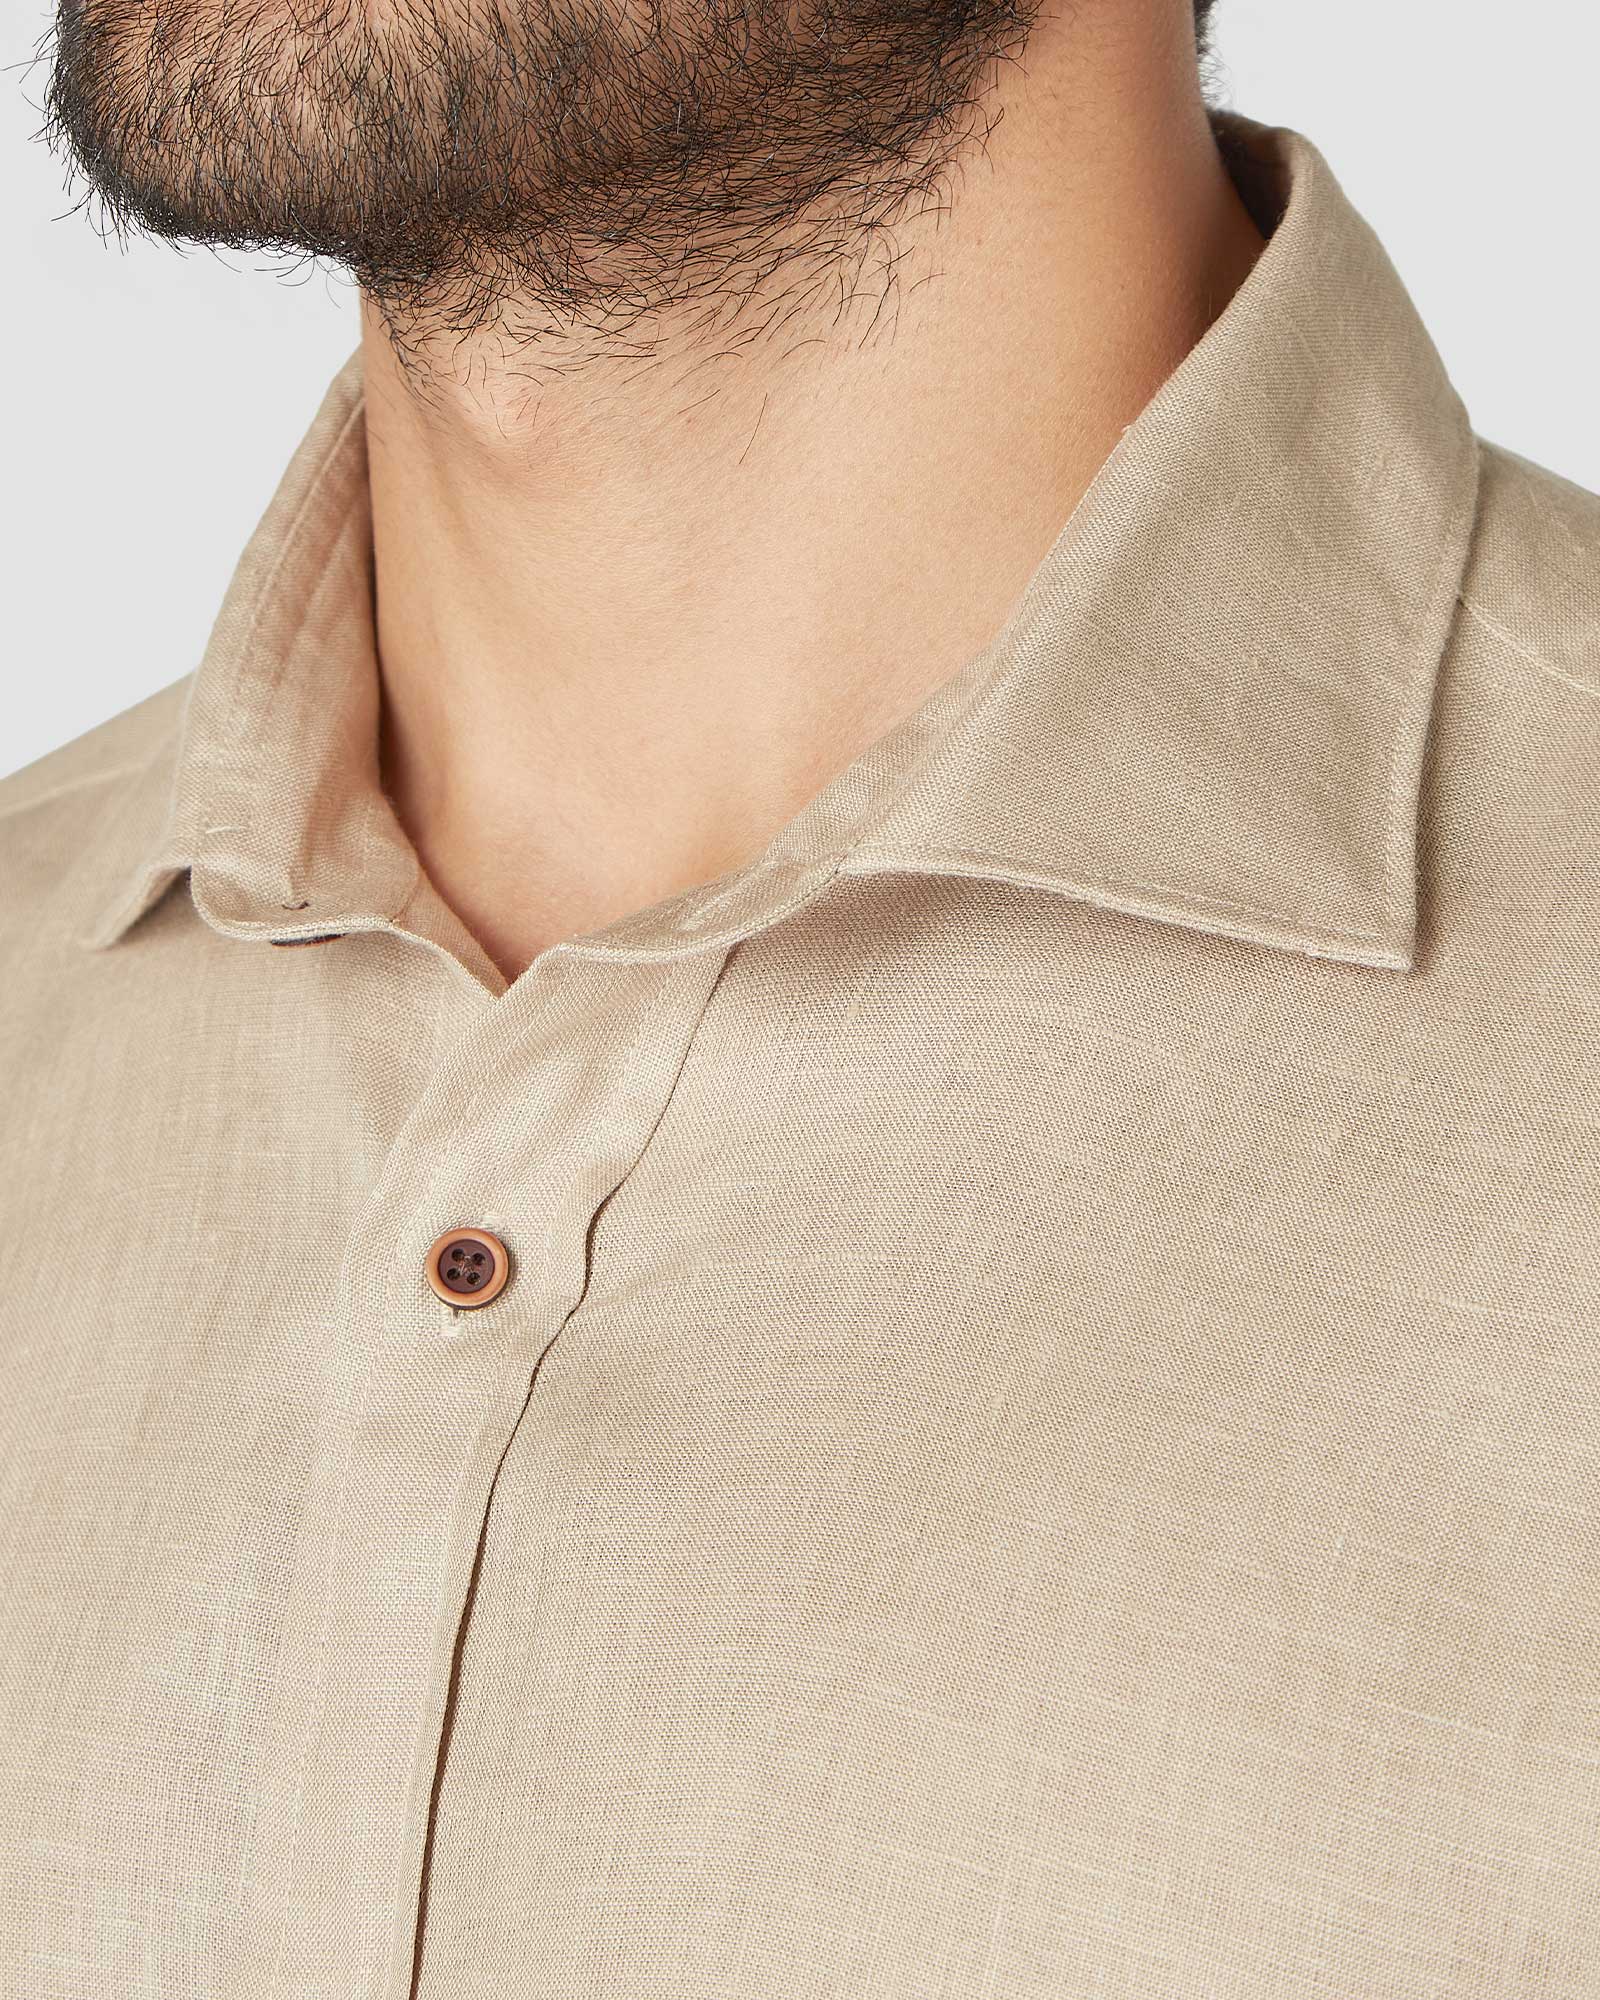 Bombay Shirt Company - Sand Rush Linen Shirt